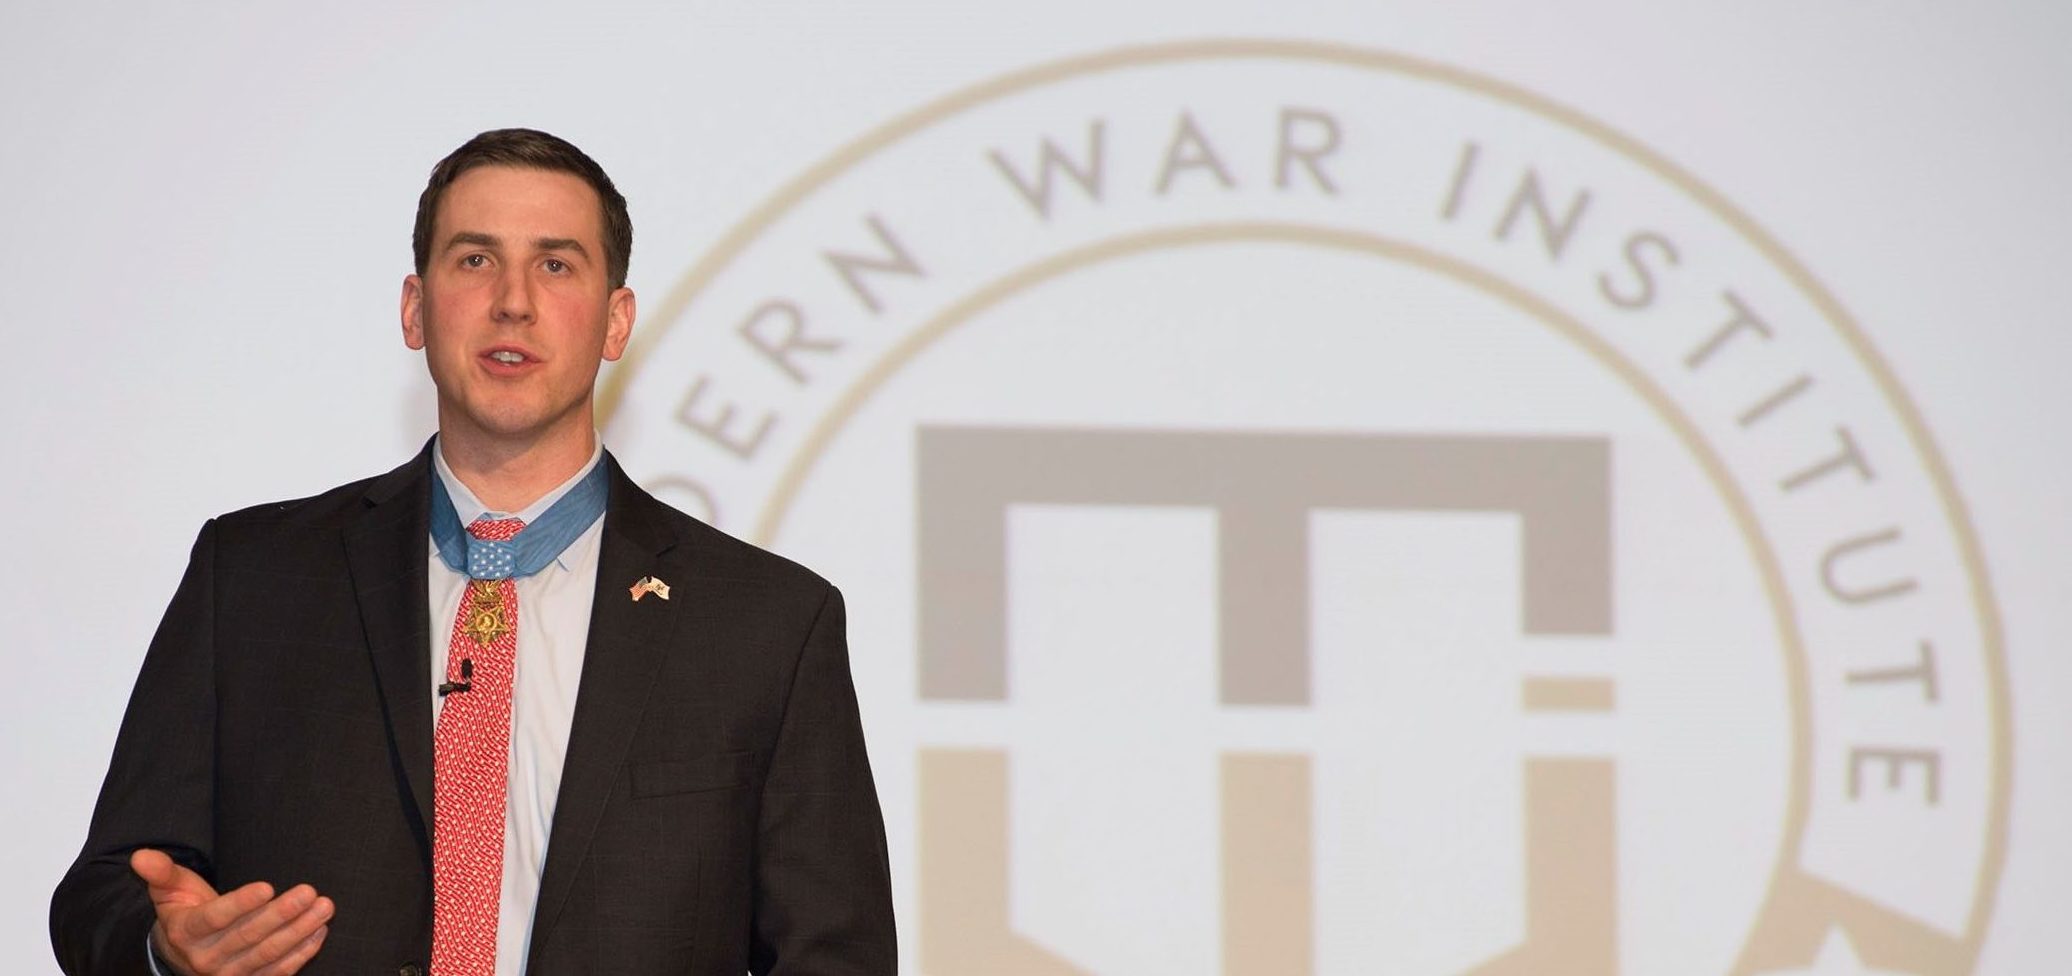 Medal of Honor Recipient Recalls Harrowing Firefight in Wanat, Afghanistan